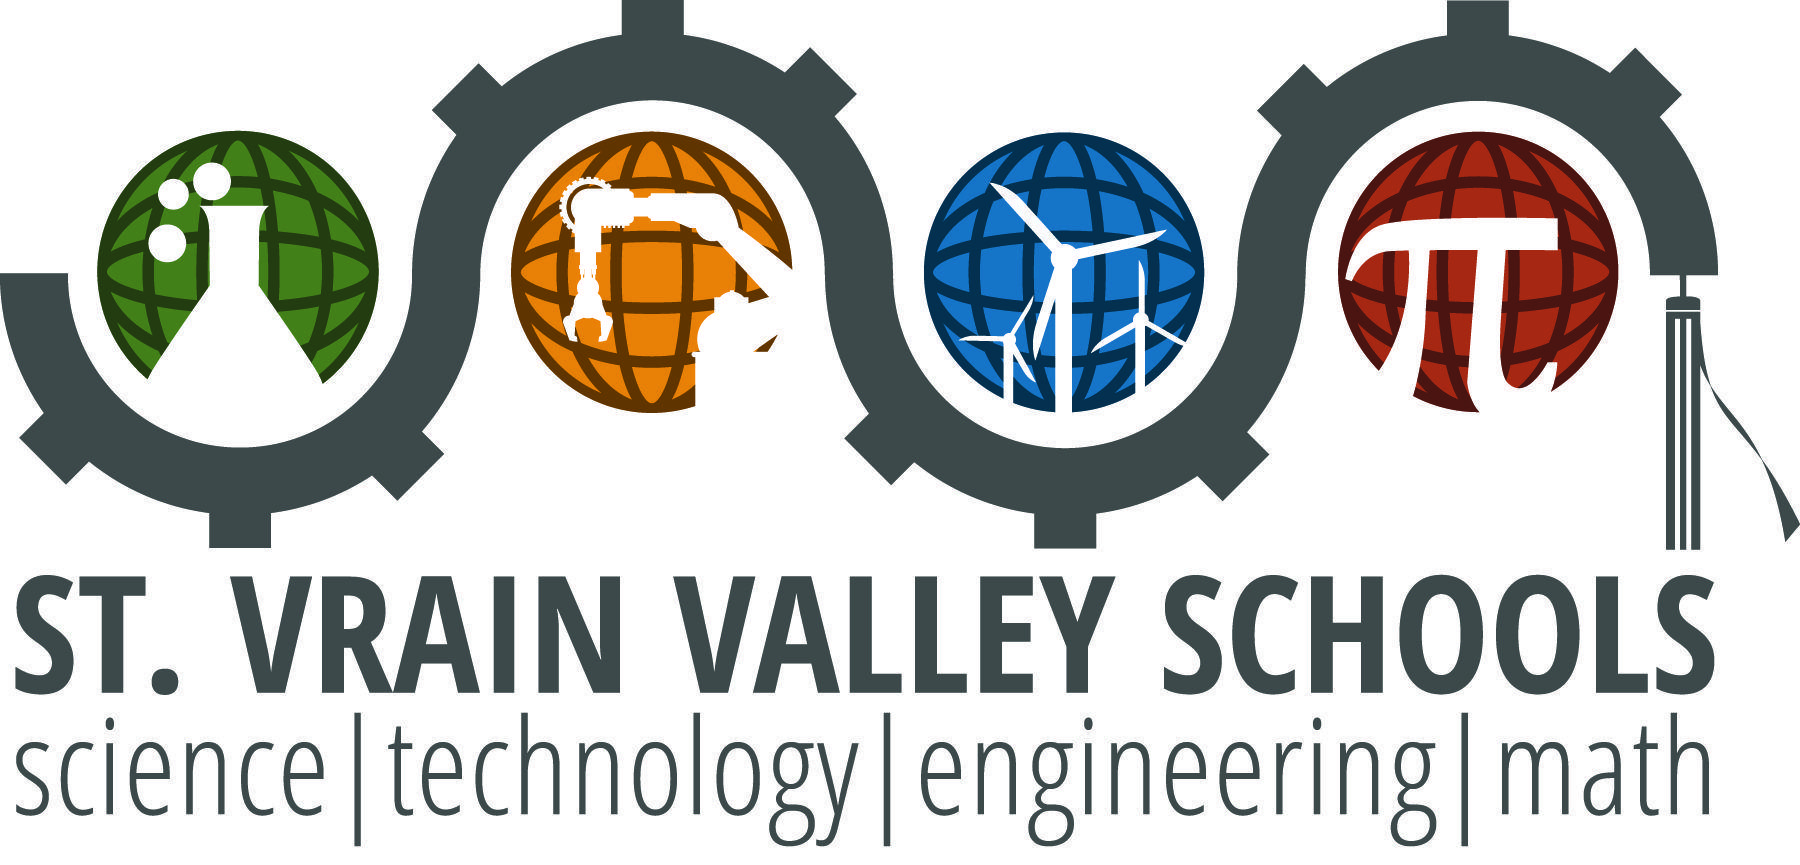 Stem Logo - STEM Logos | SVVSD STEM